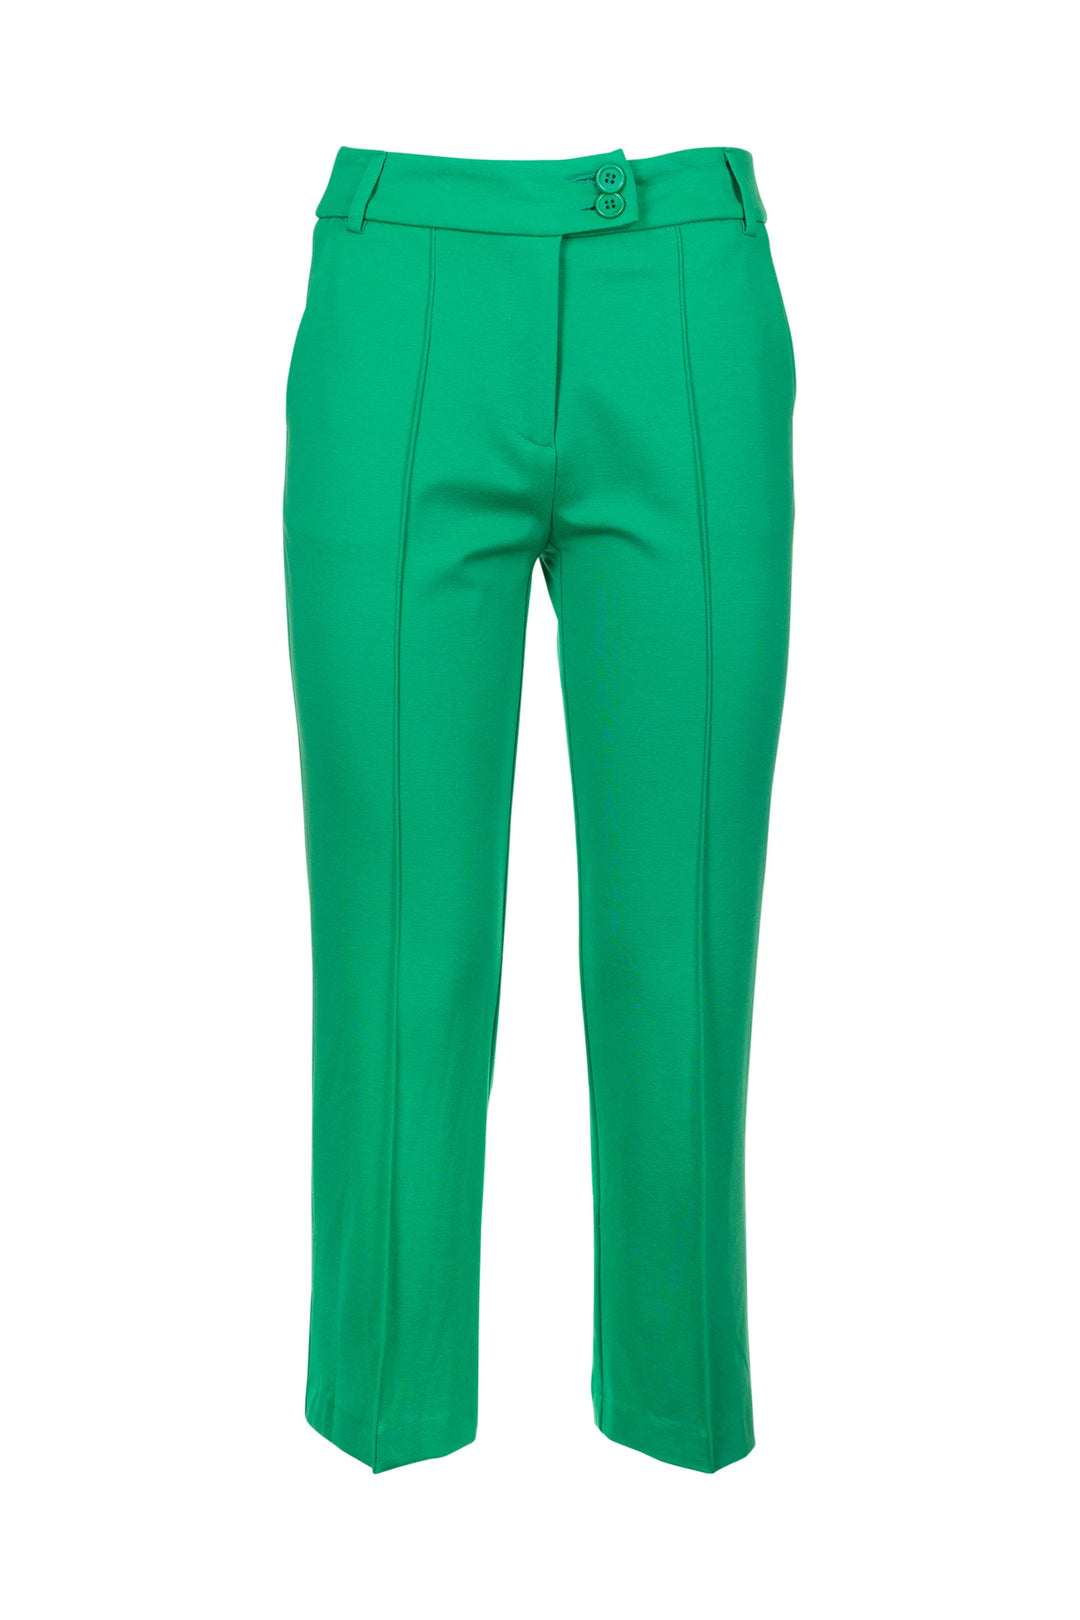 FRACOMINA Pantalone cropped verde in tessuto stretch - Mancinelli 1954